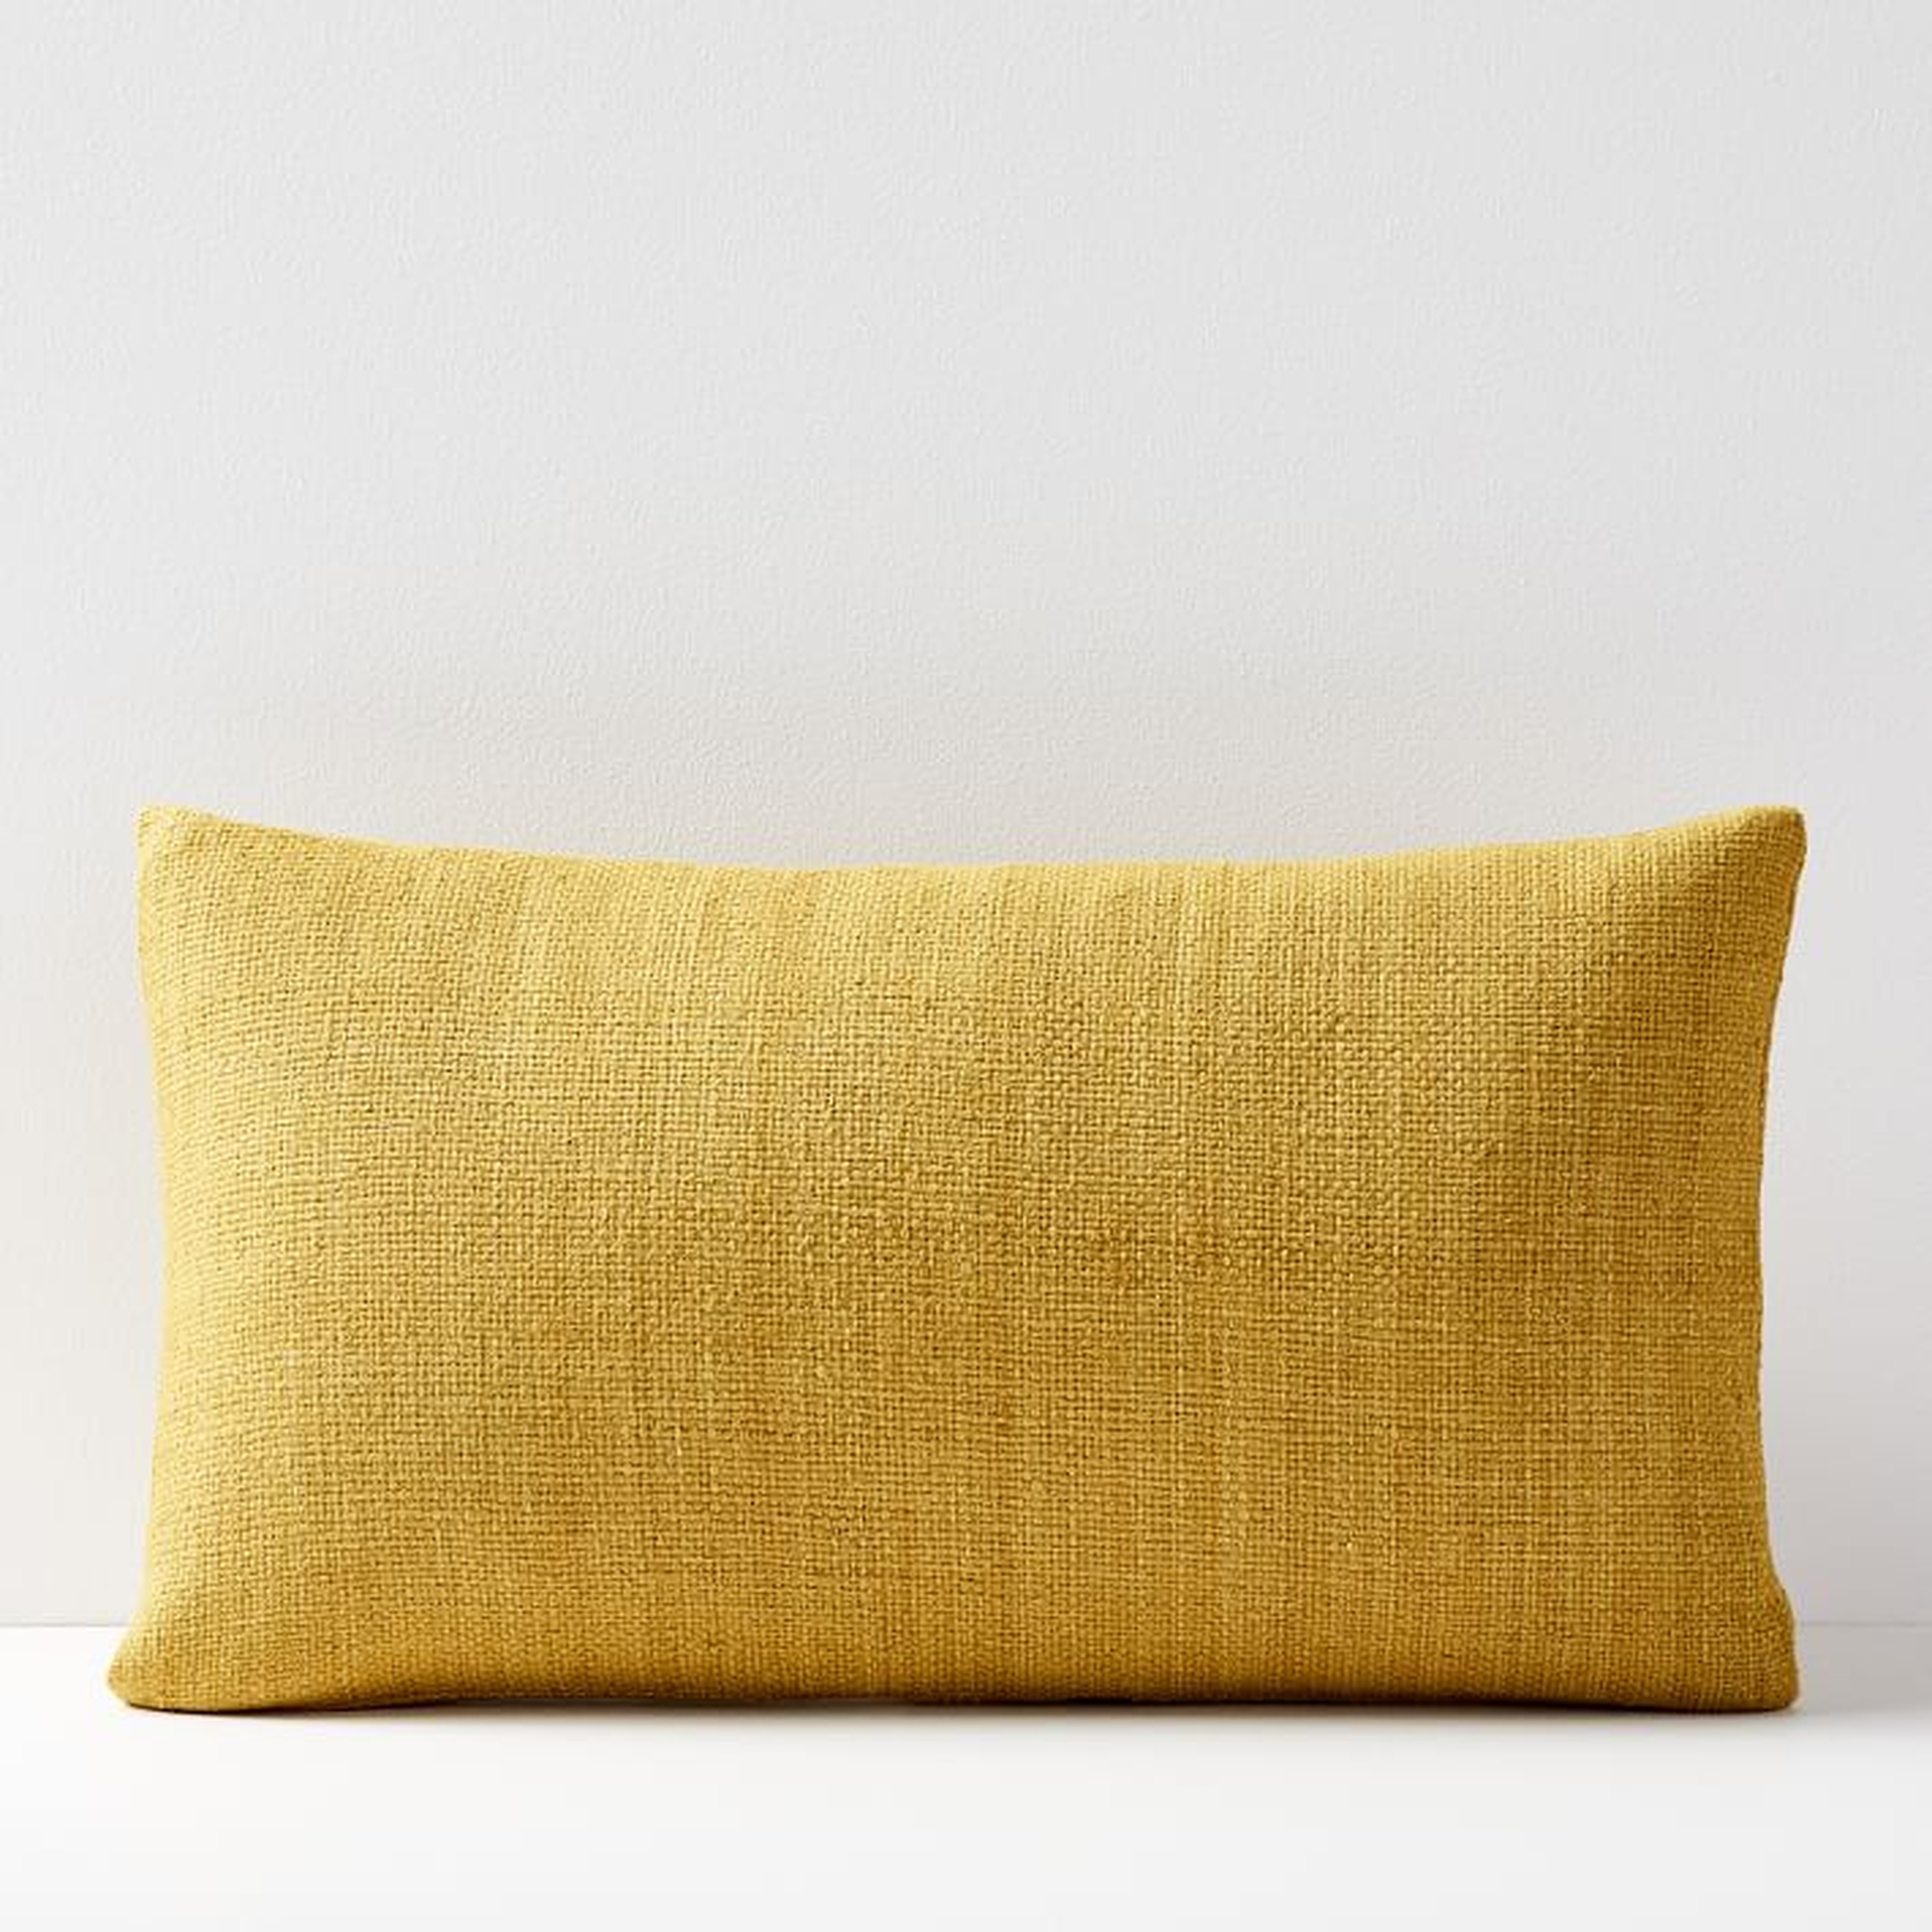 Silk Hand-Loomed Pillow Cover, Dark Horseradish,12"x21" - West Elm